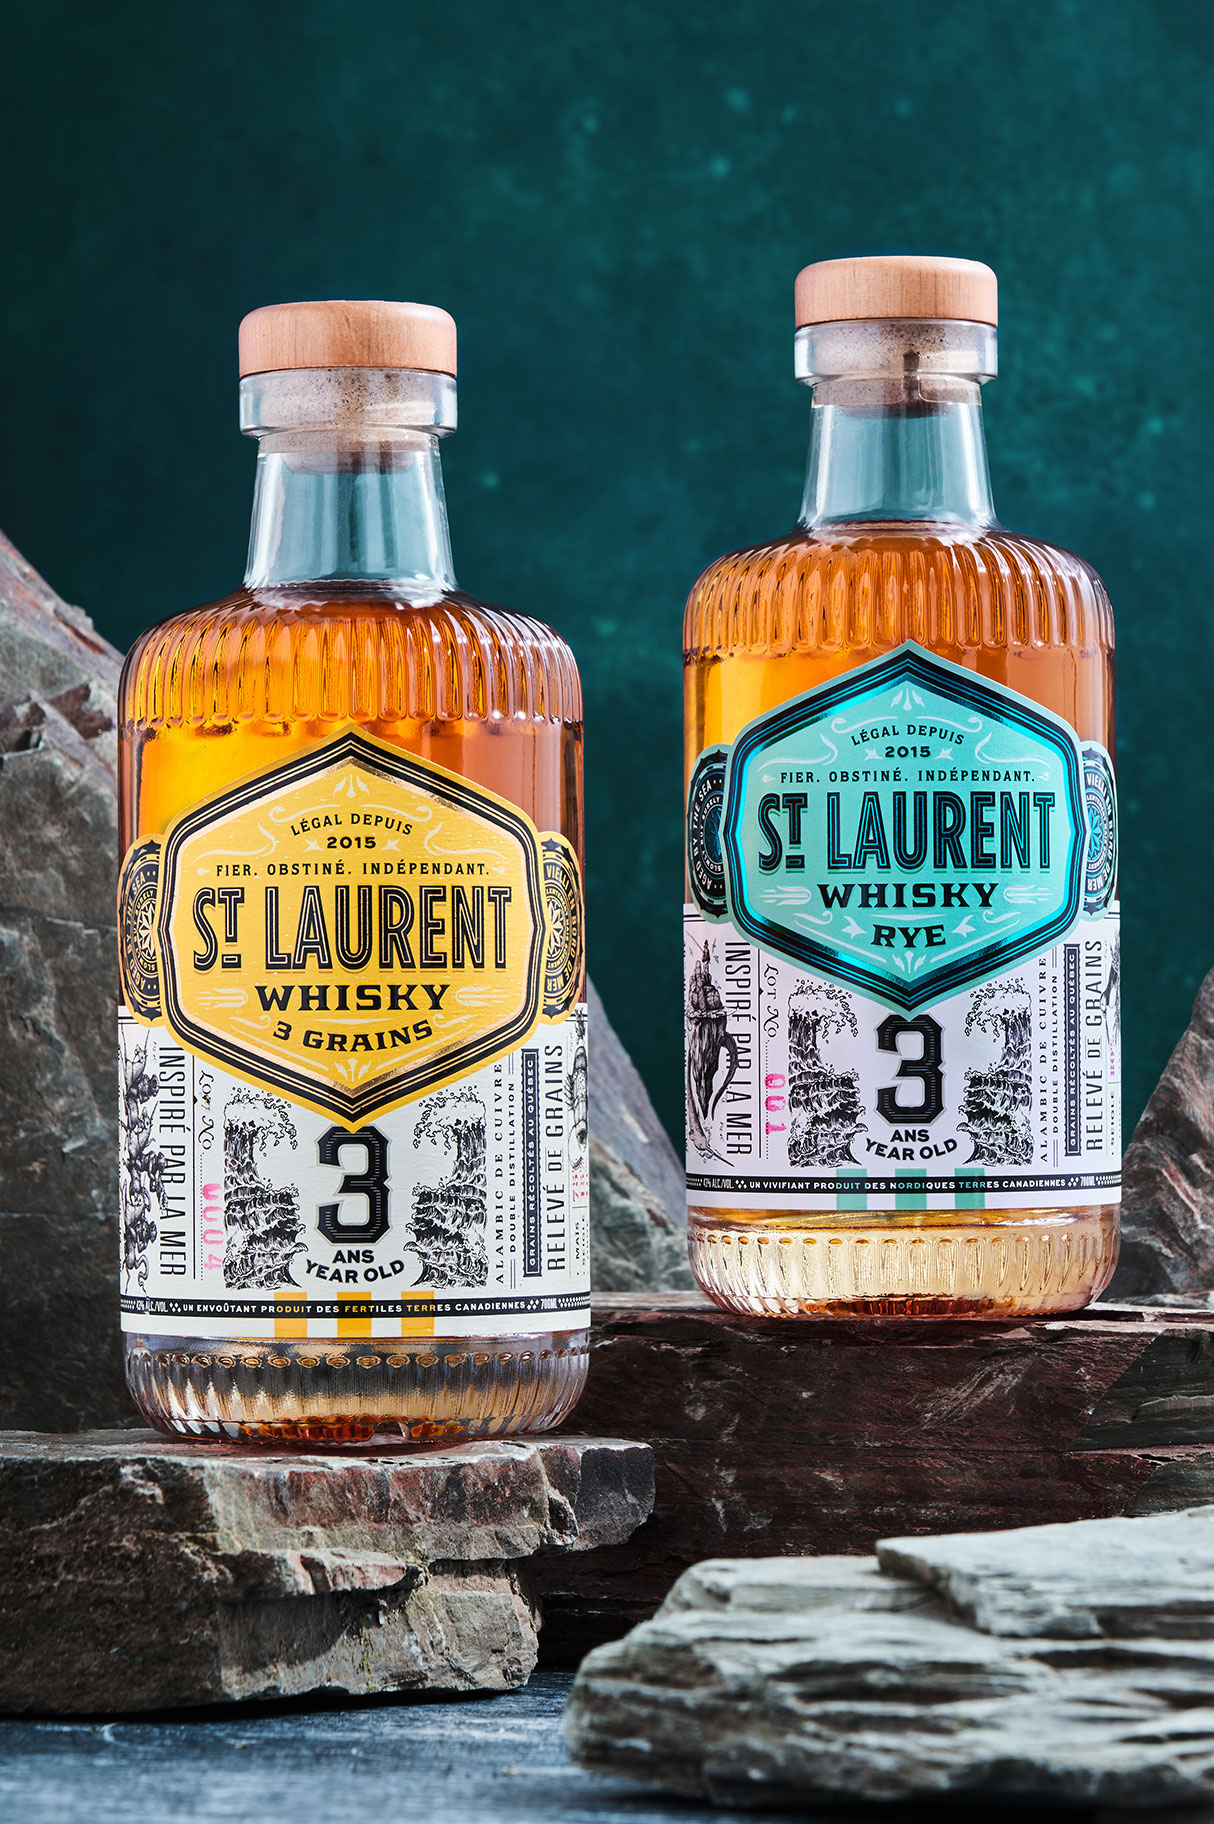 St. Laurent Whisky package design